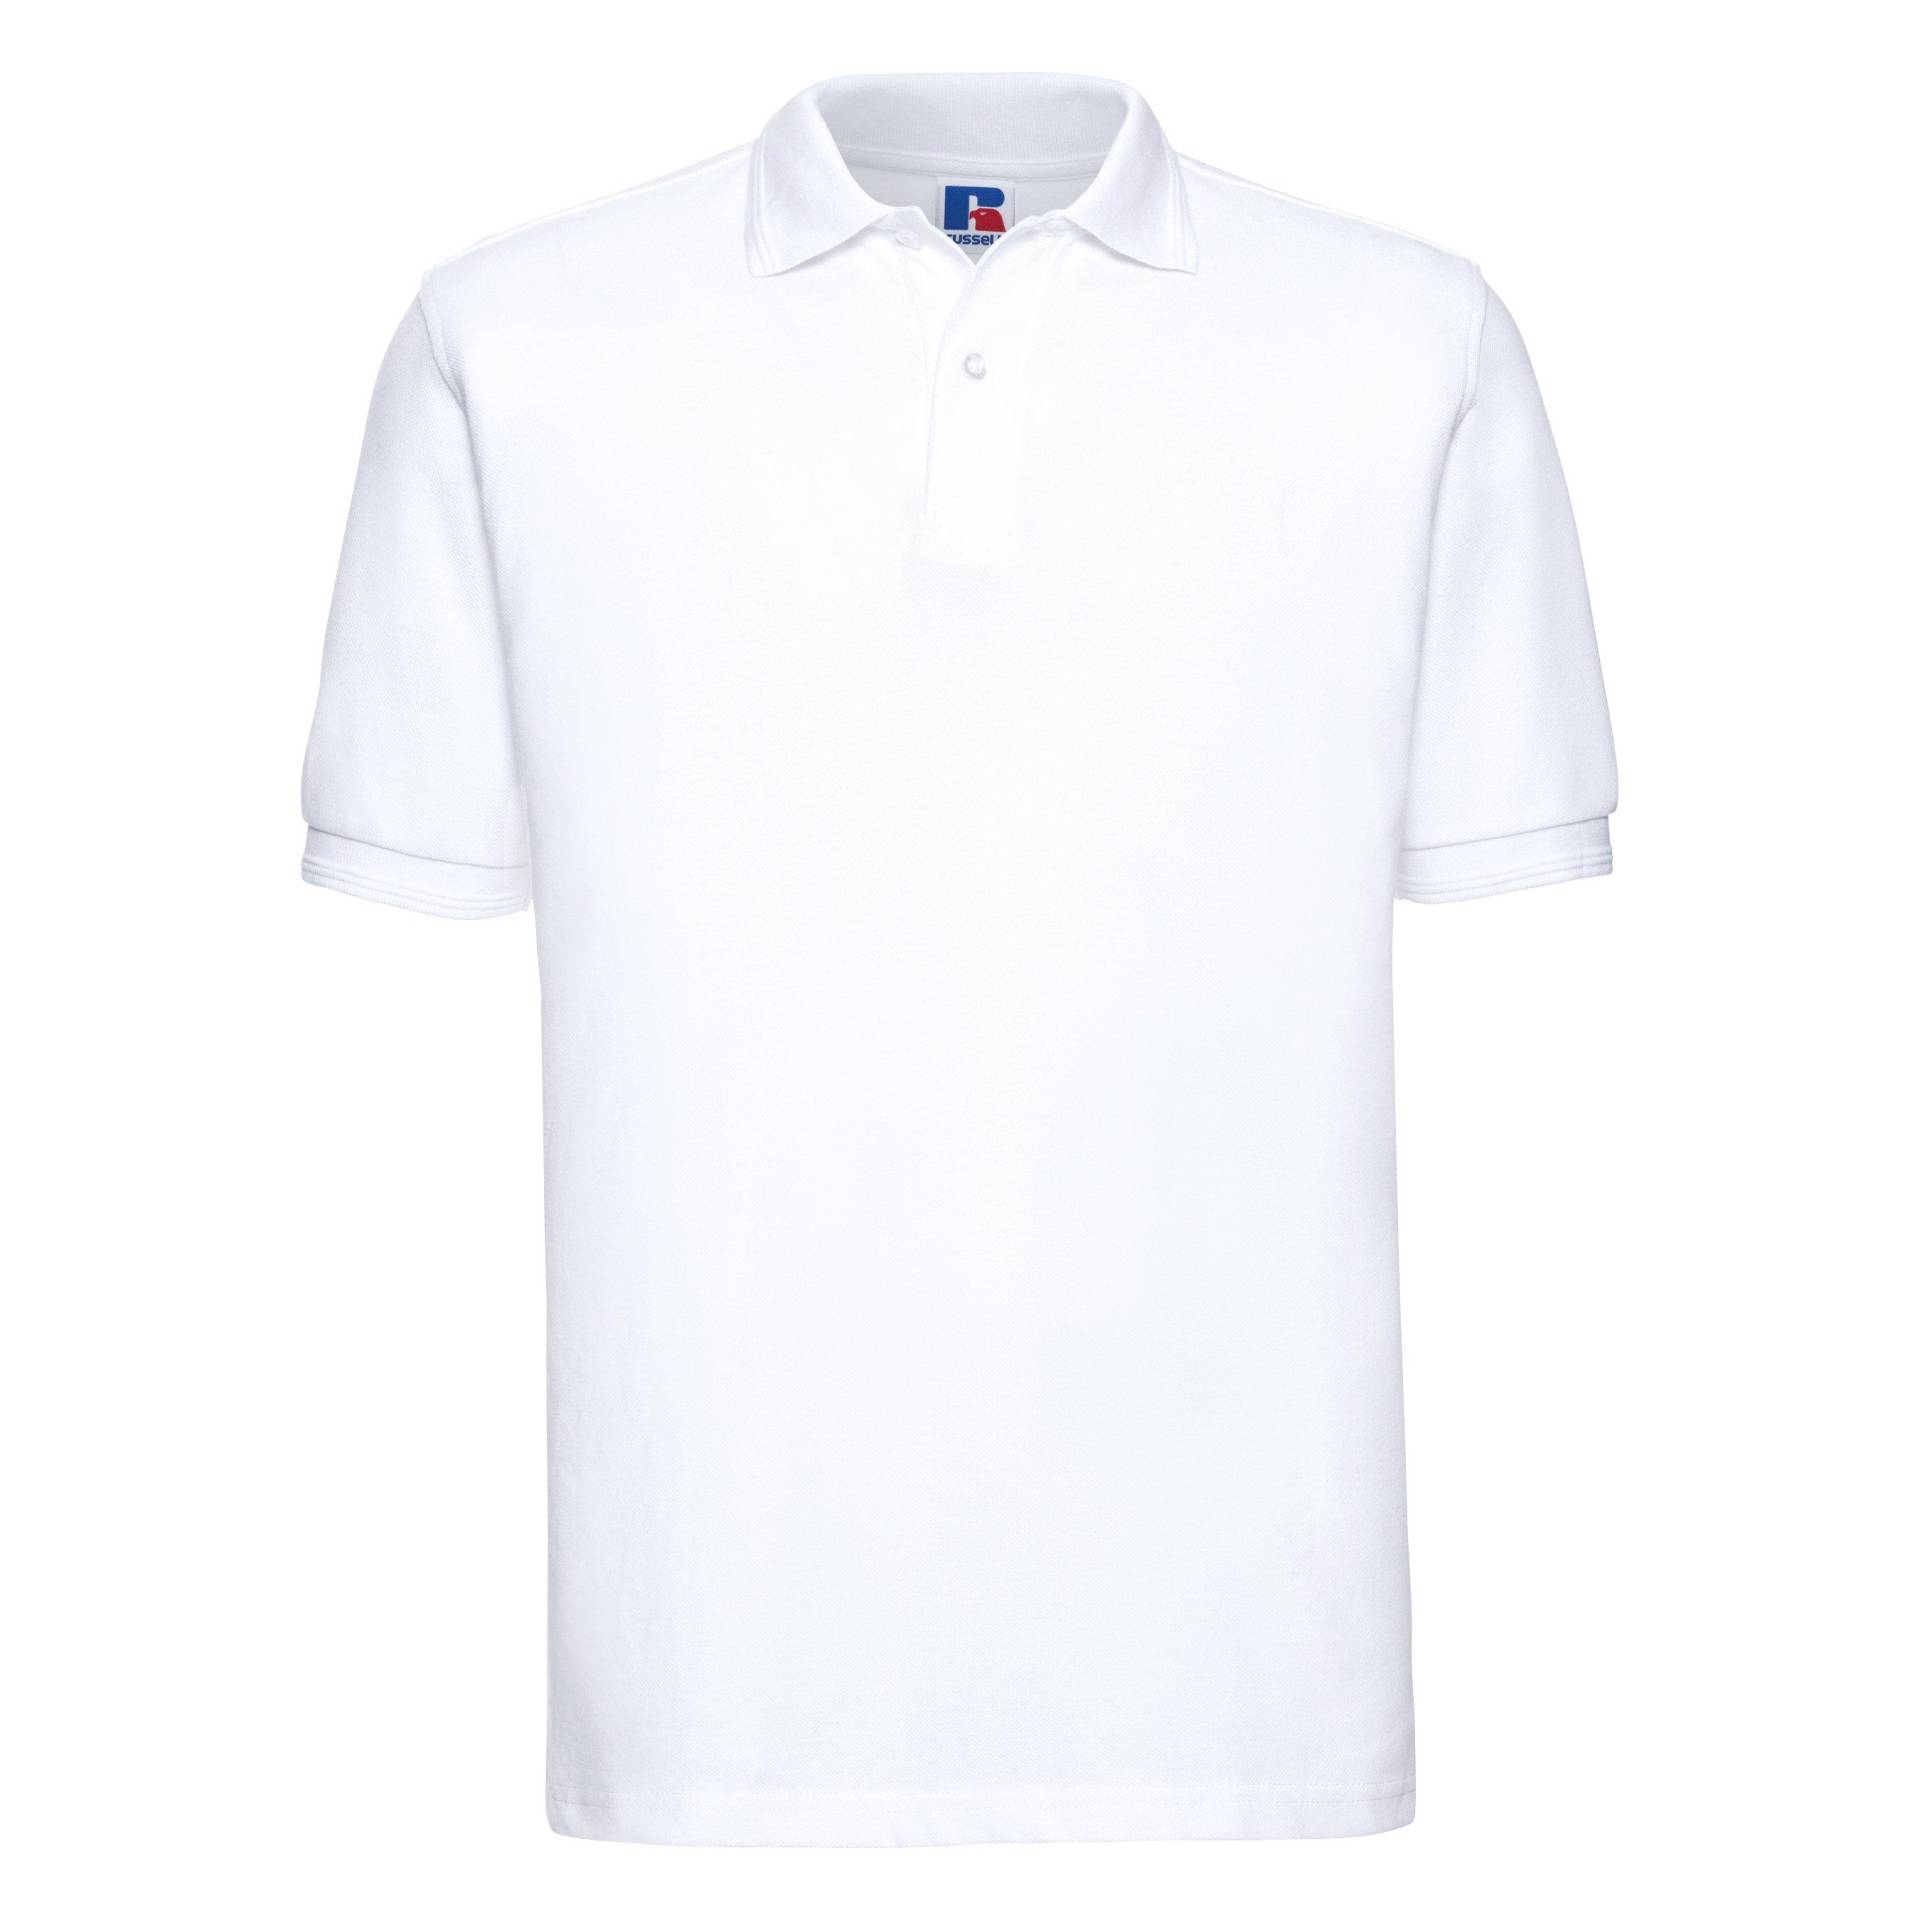 Ripple Collar & Cuff Kurzarm Polo Shirt Herren Weiss XL von Russell